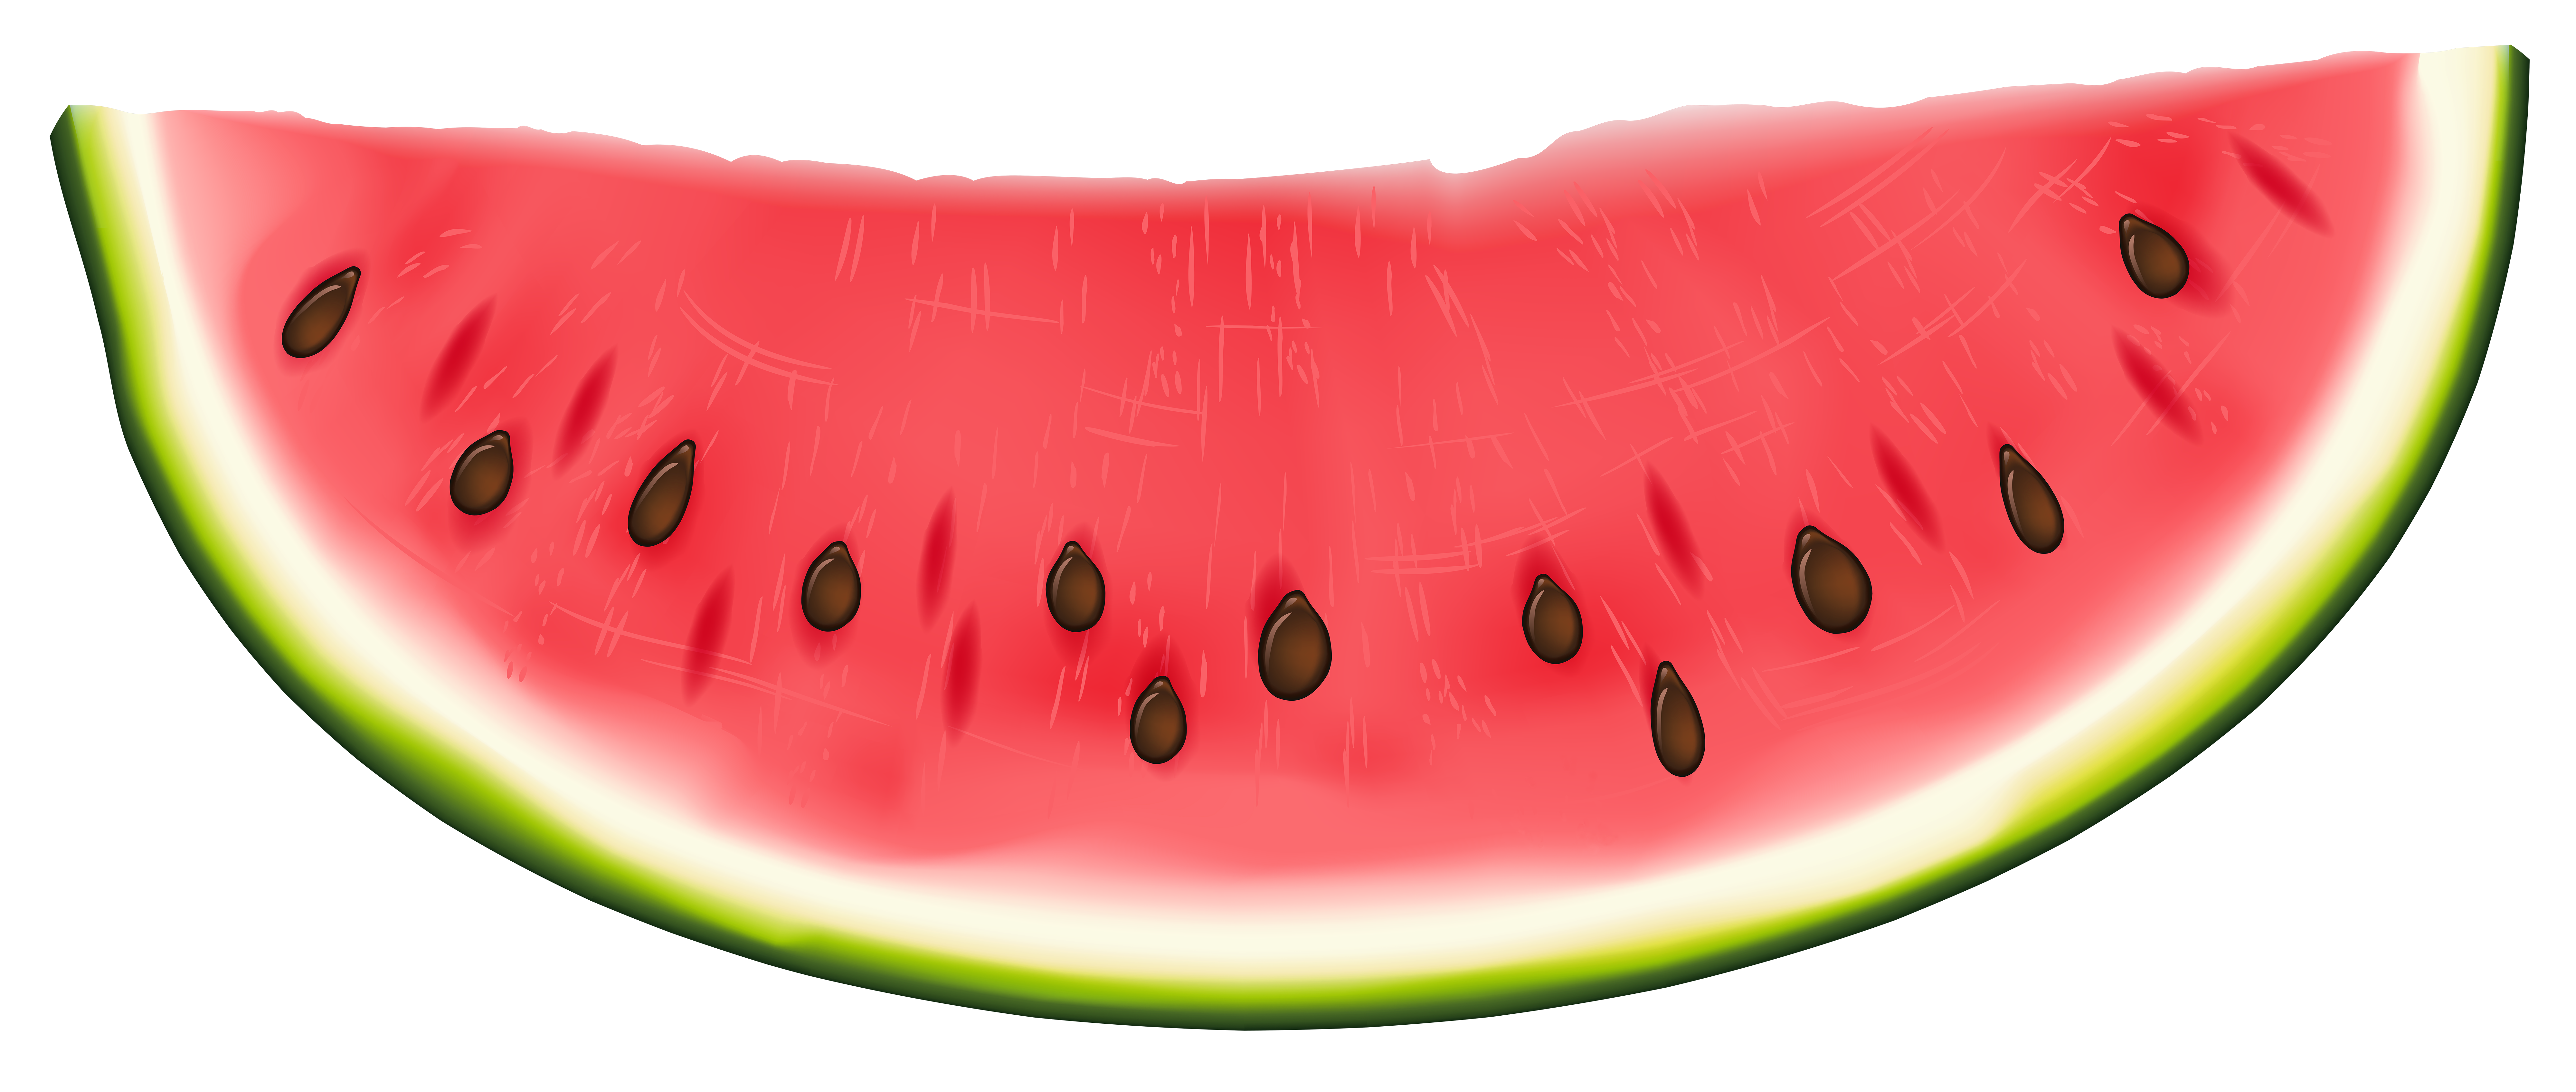 Watermelon clip art image